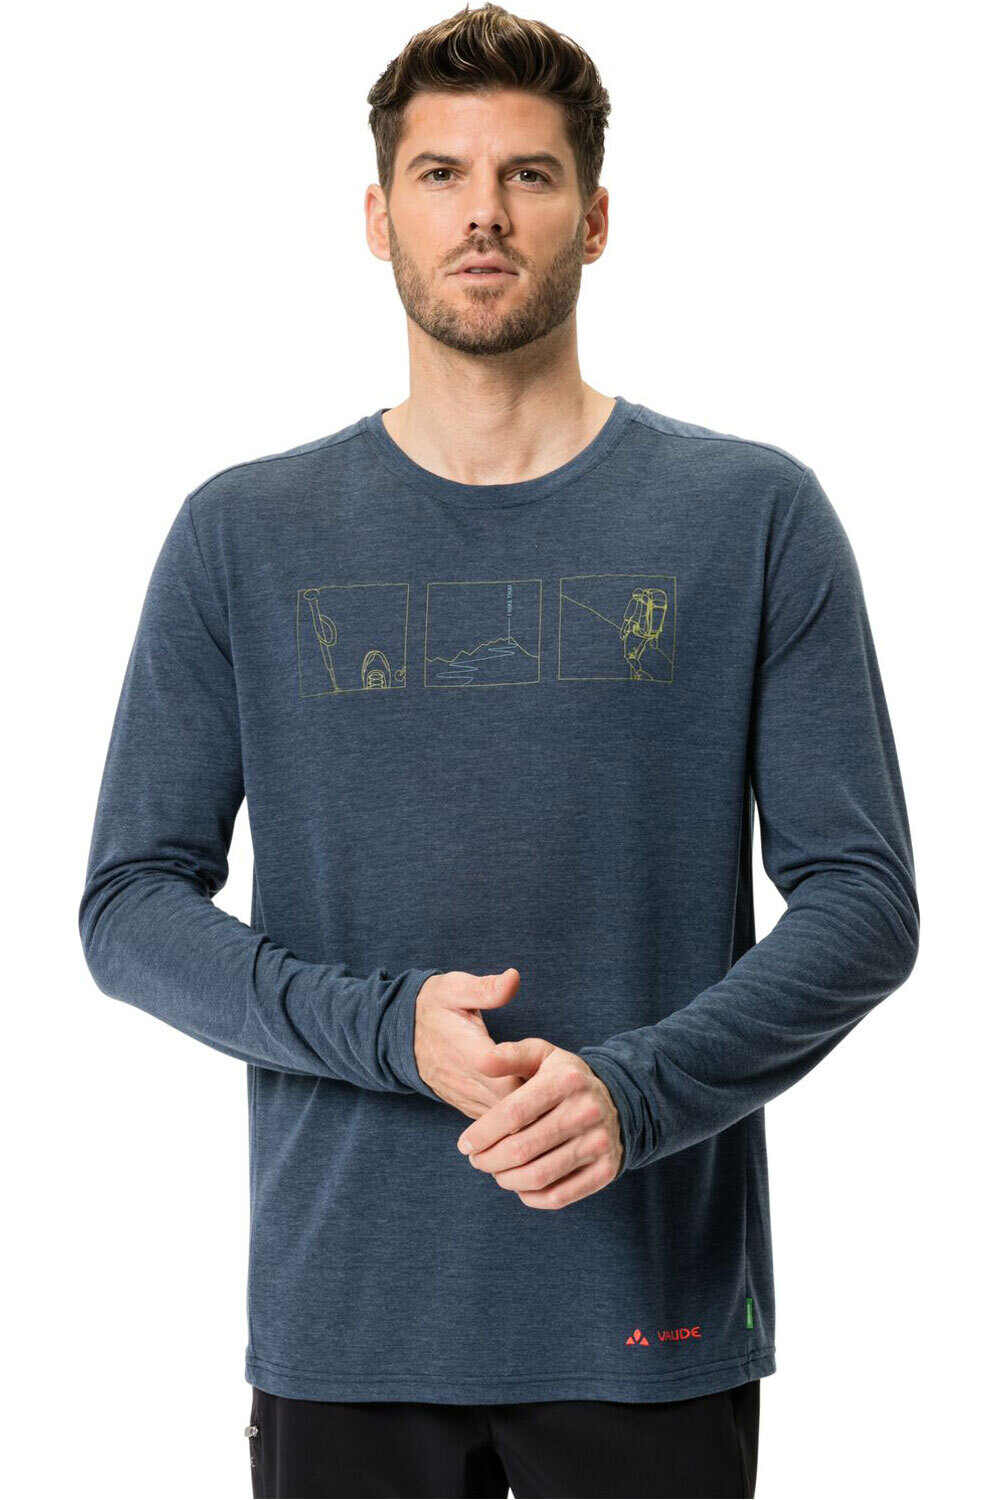 Vaude camiseta montaña manga larga hombre Men's Rosemoor LS T-Shirt III vista frontal